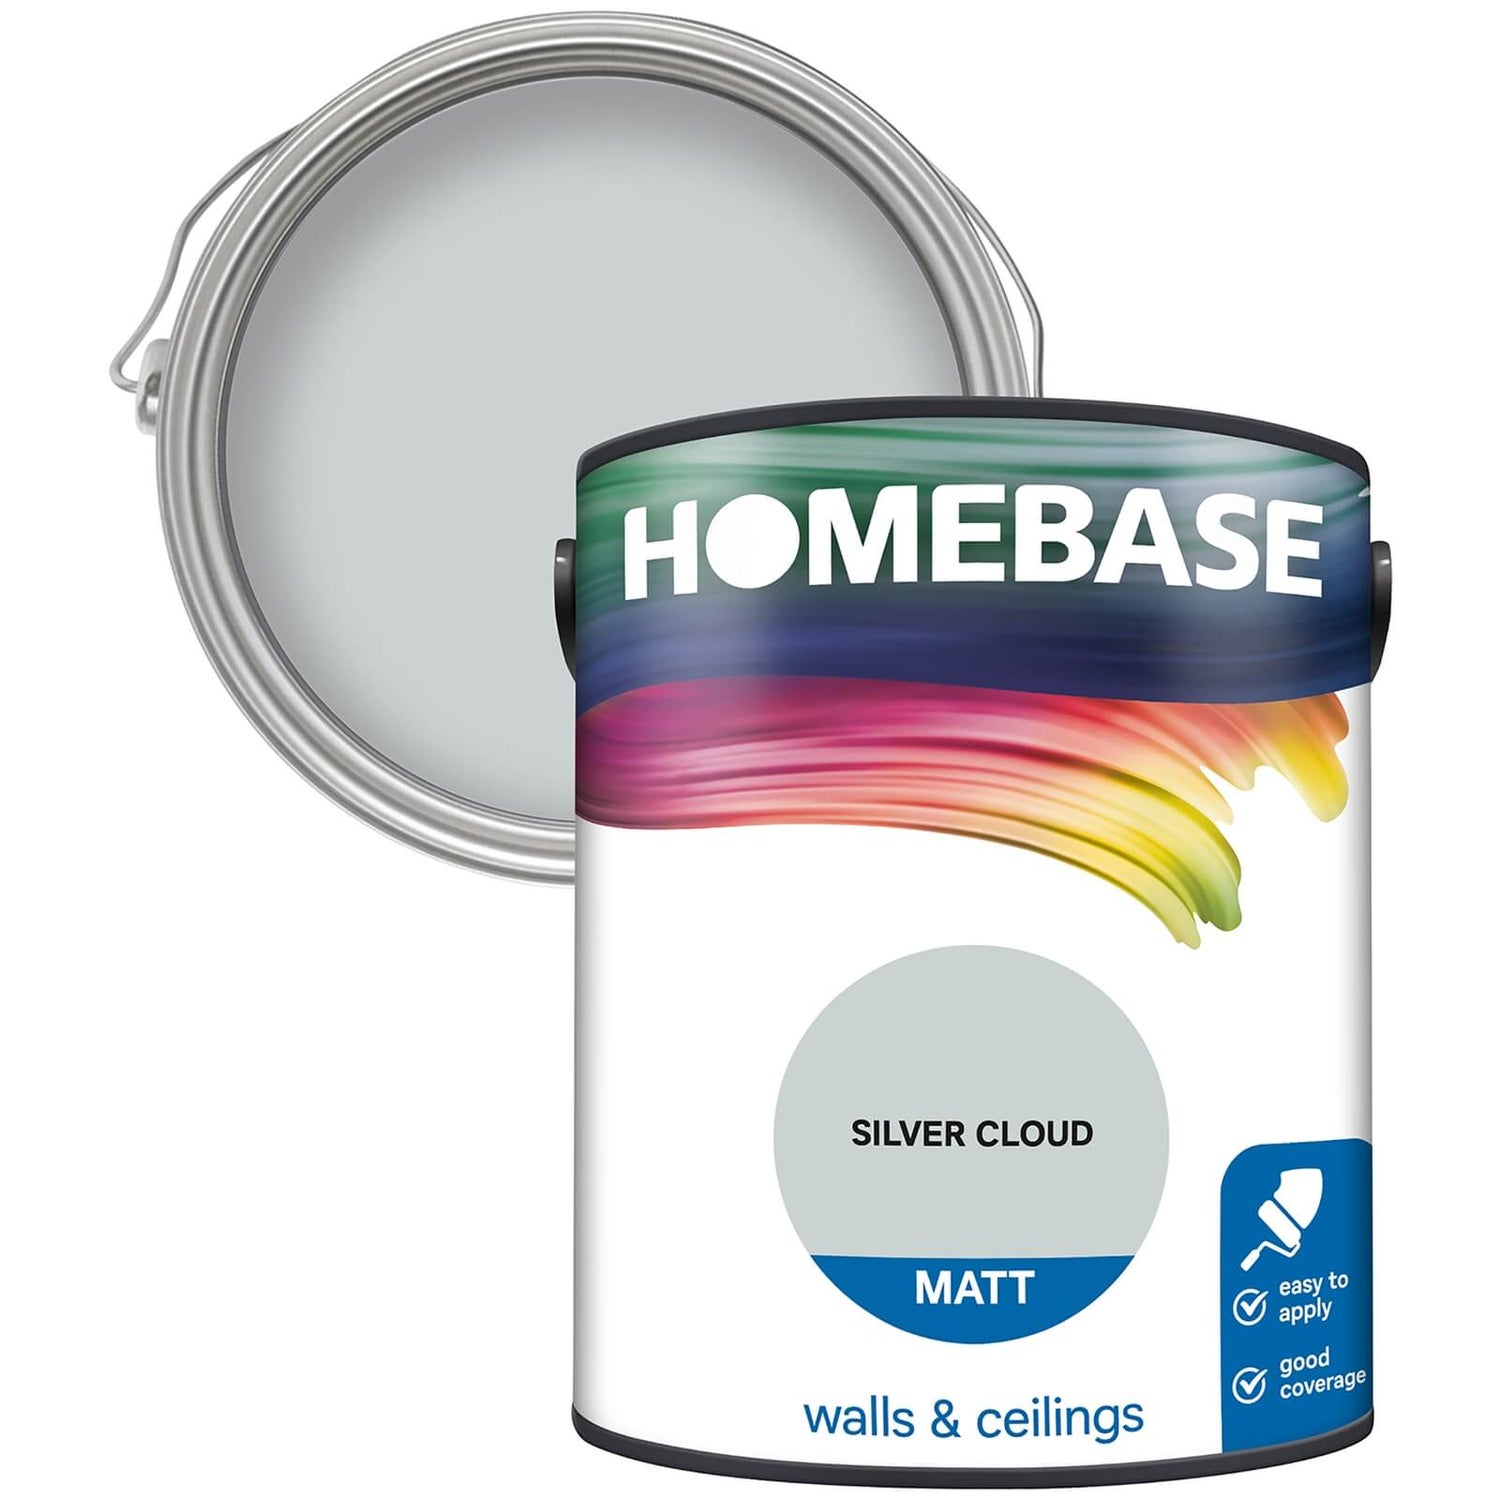 Homebase Matt Paint Silver Cloud 5l Homebase